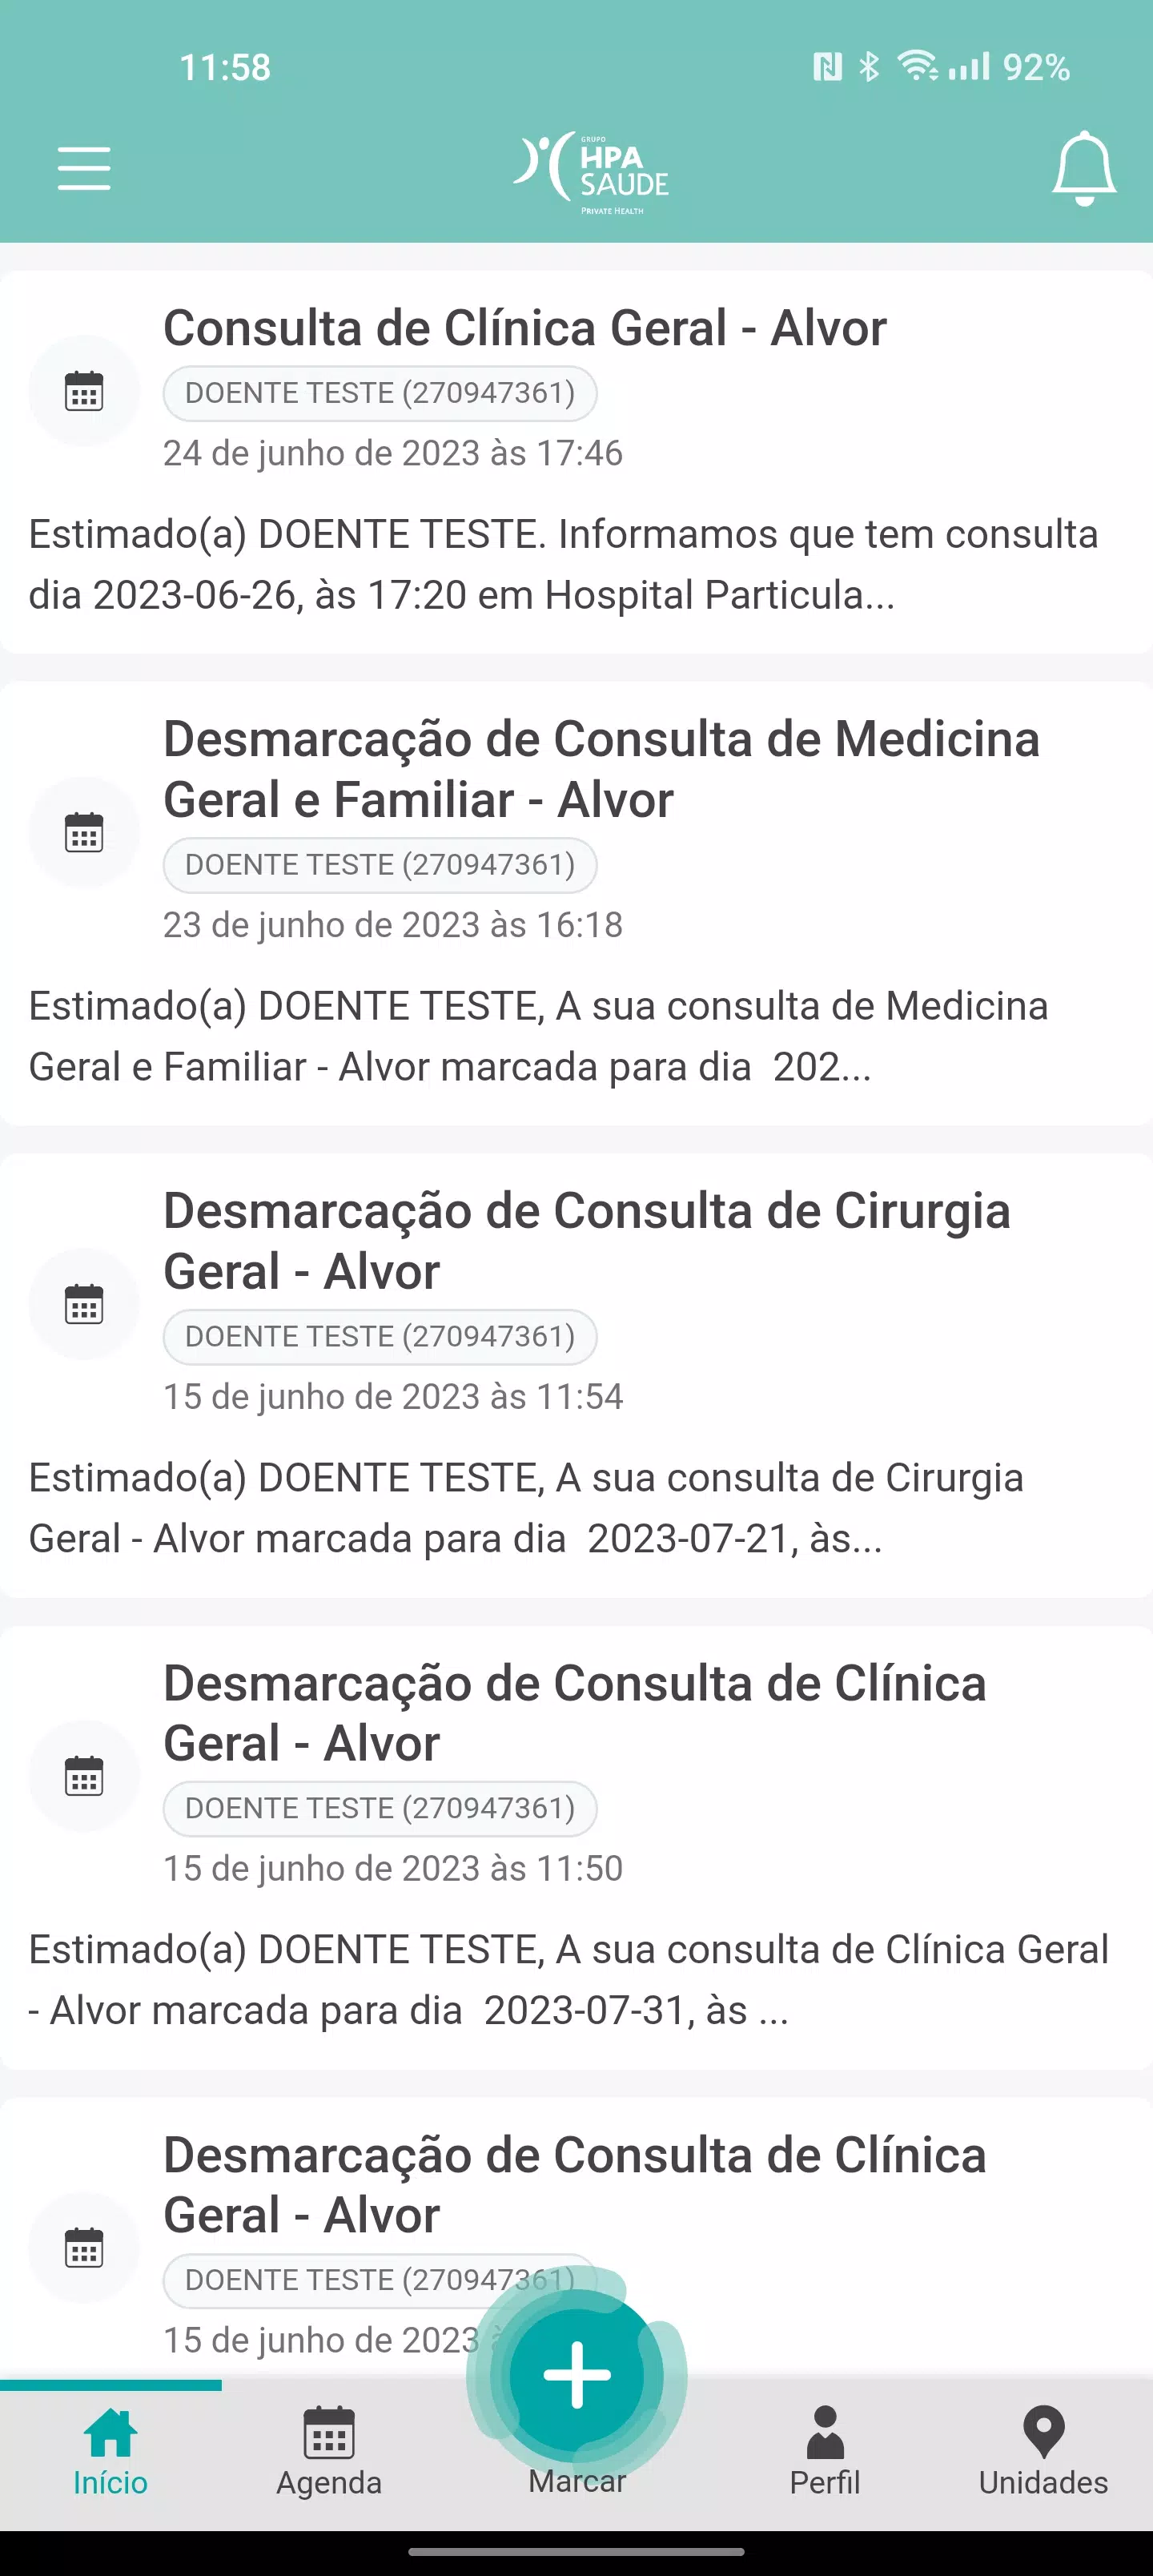 myHPA Saúde Screenshot1